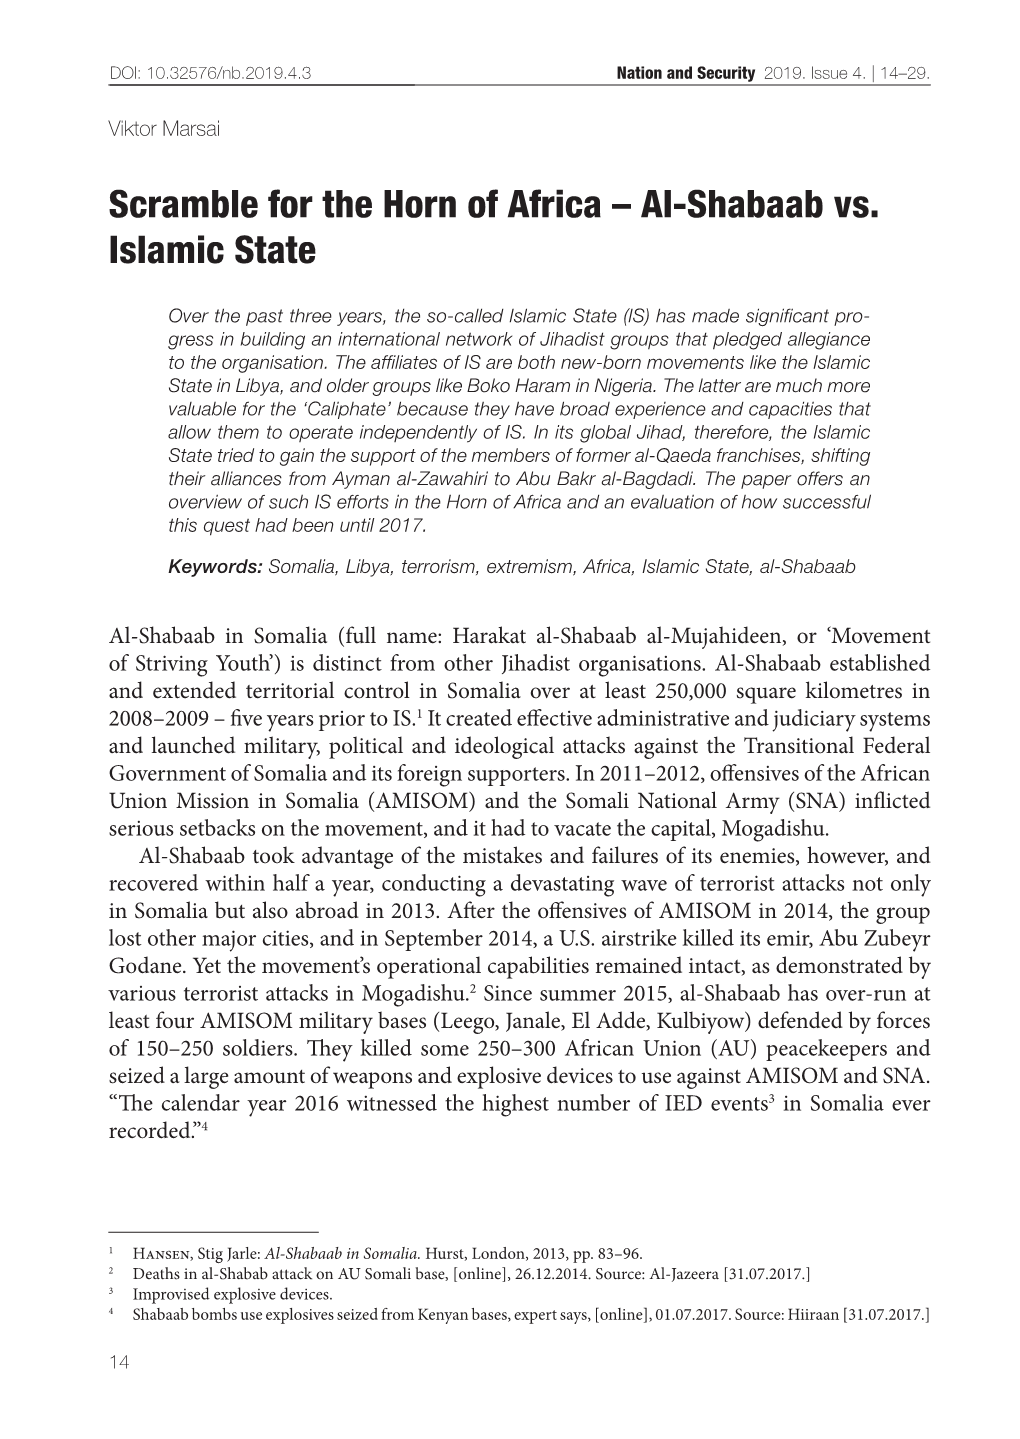 Scramble for the Horn of Africa – Al-Shabaab Vs. Islamic State